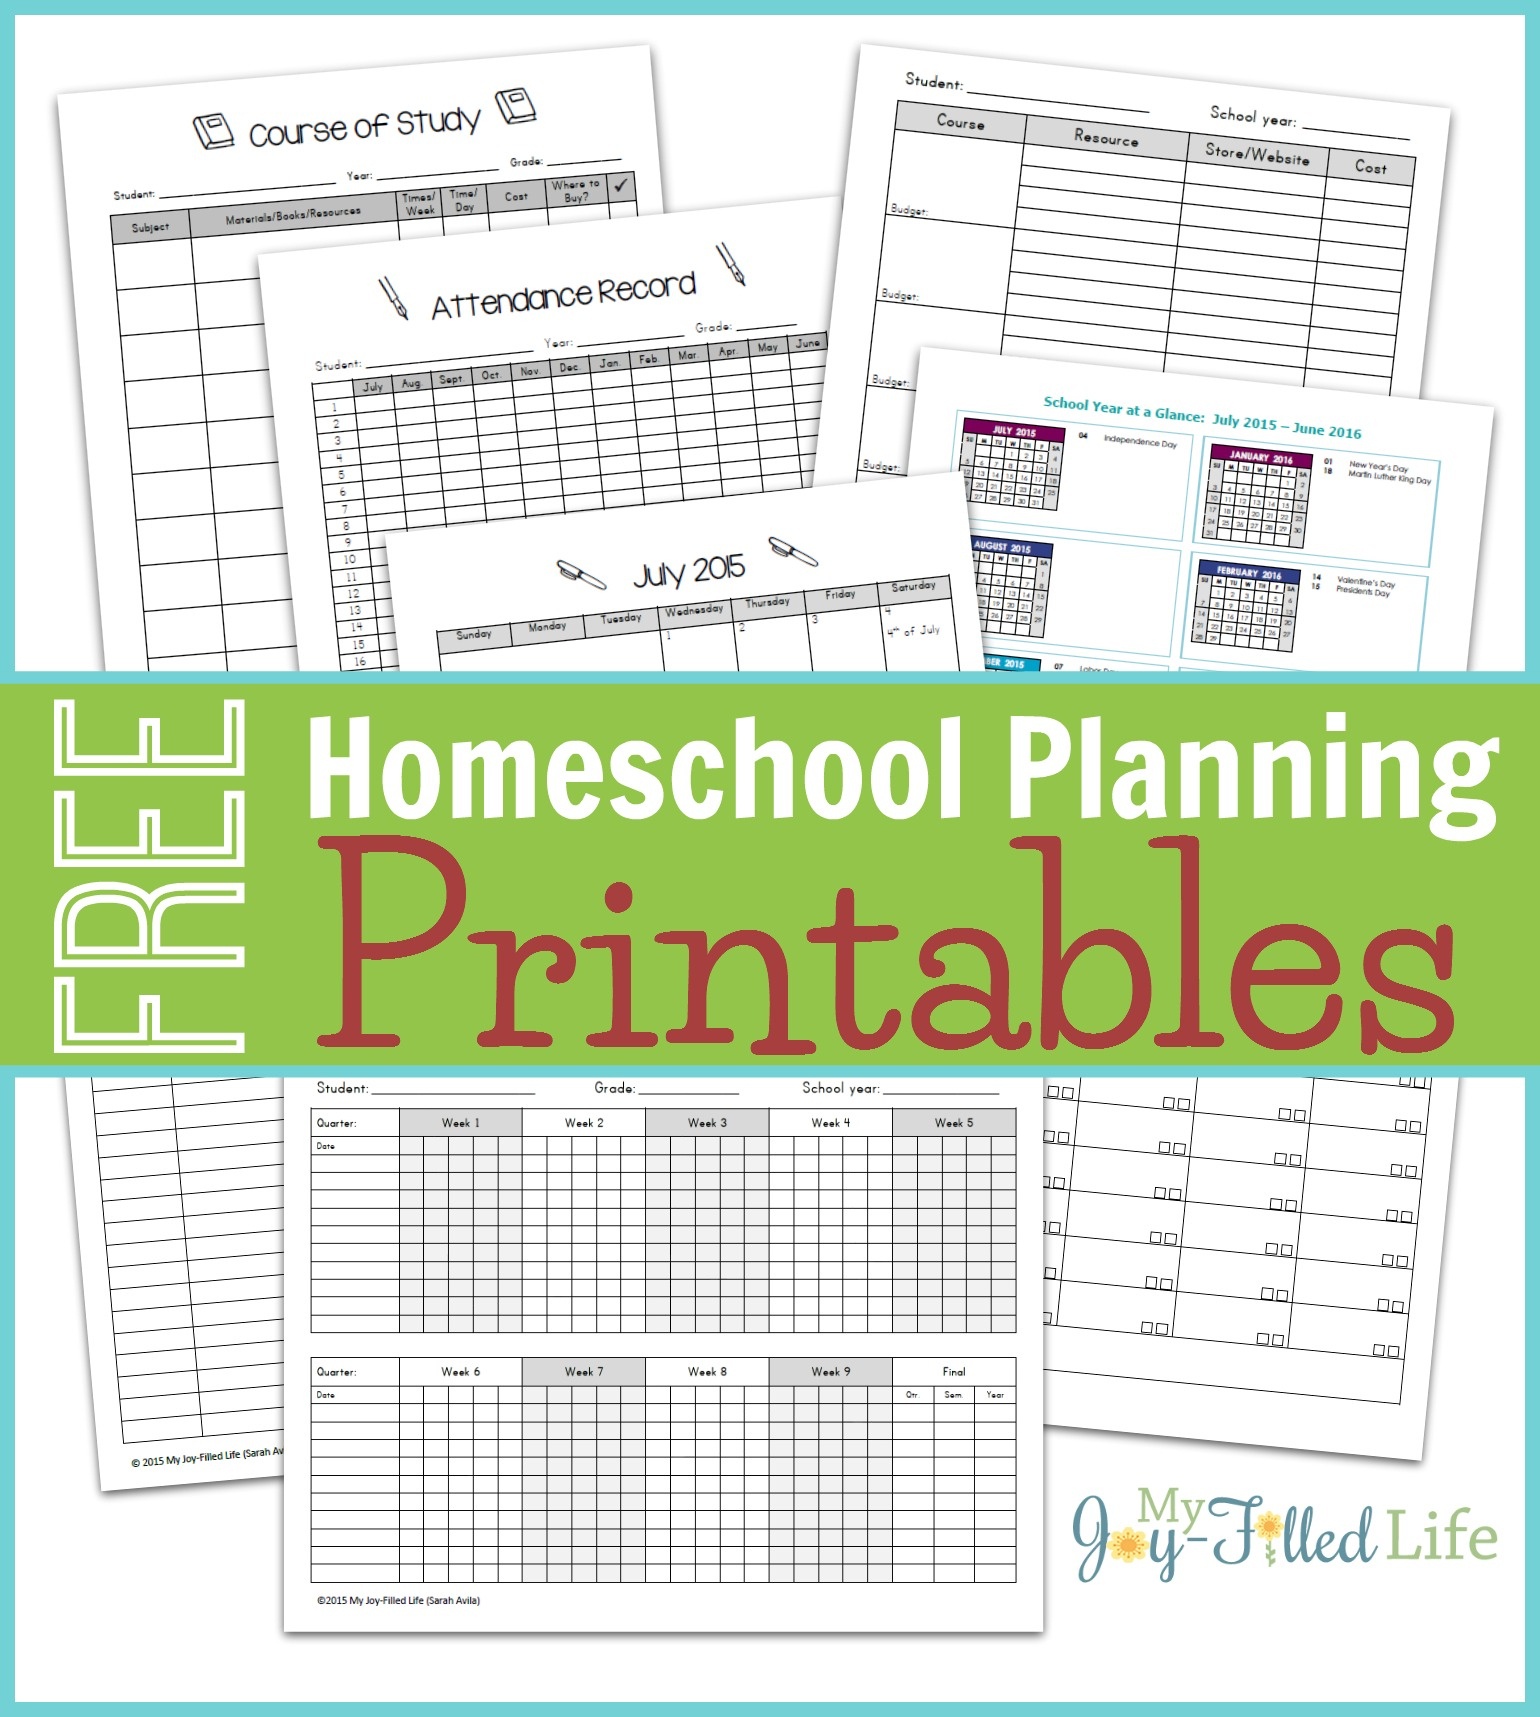 Homeschool Planning Resources &amp;amp; Free Printable Planning Pages - My - Free Printable Homeschool Curriculum